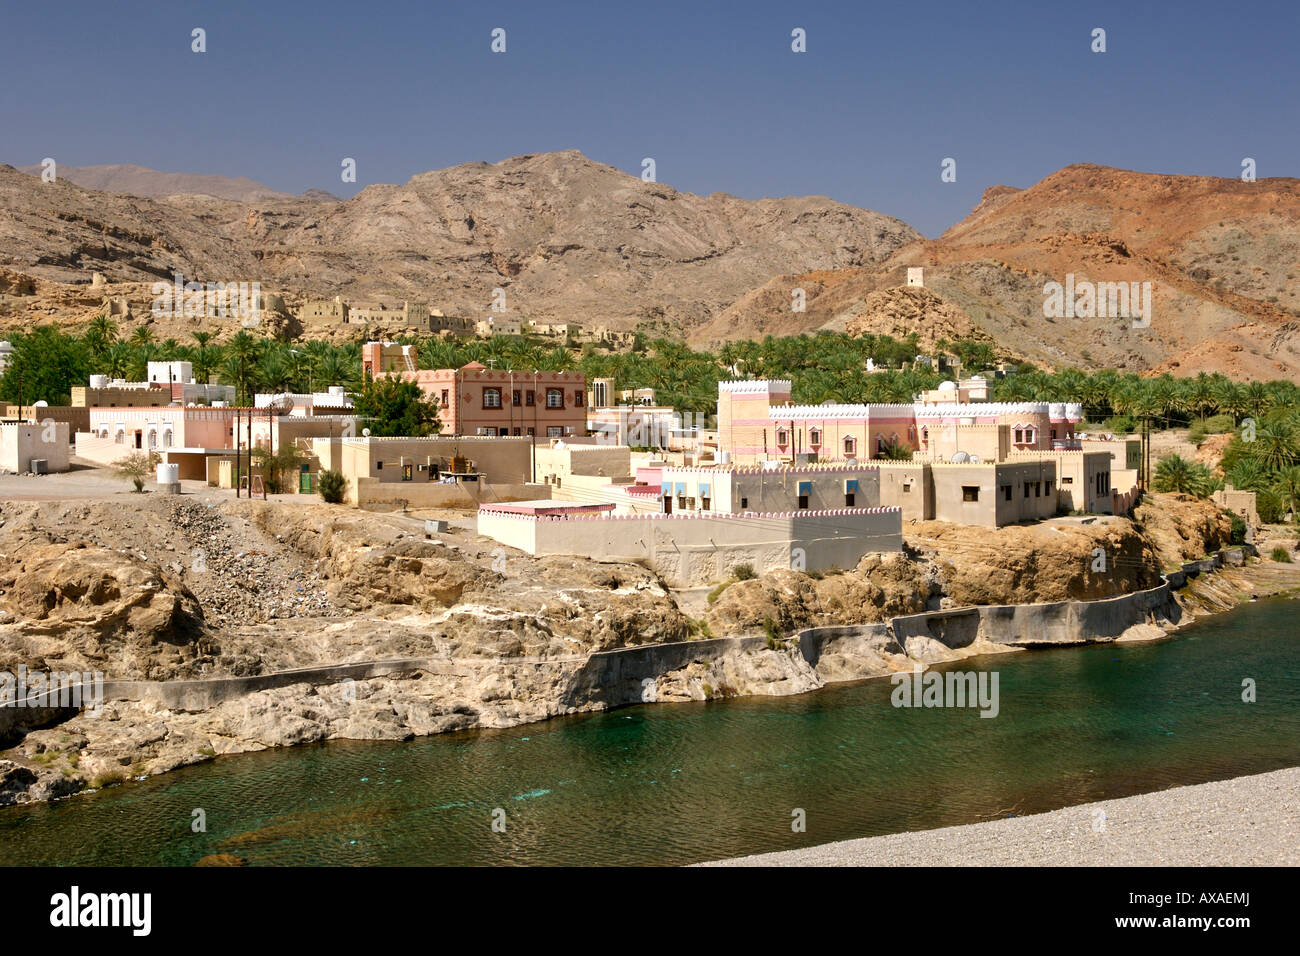 The village of Fanja in Oman. Stock Photo